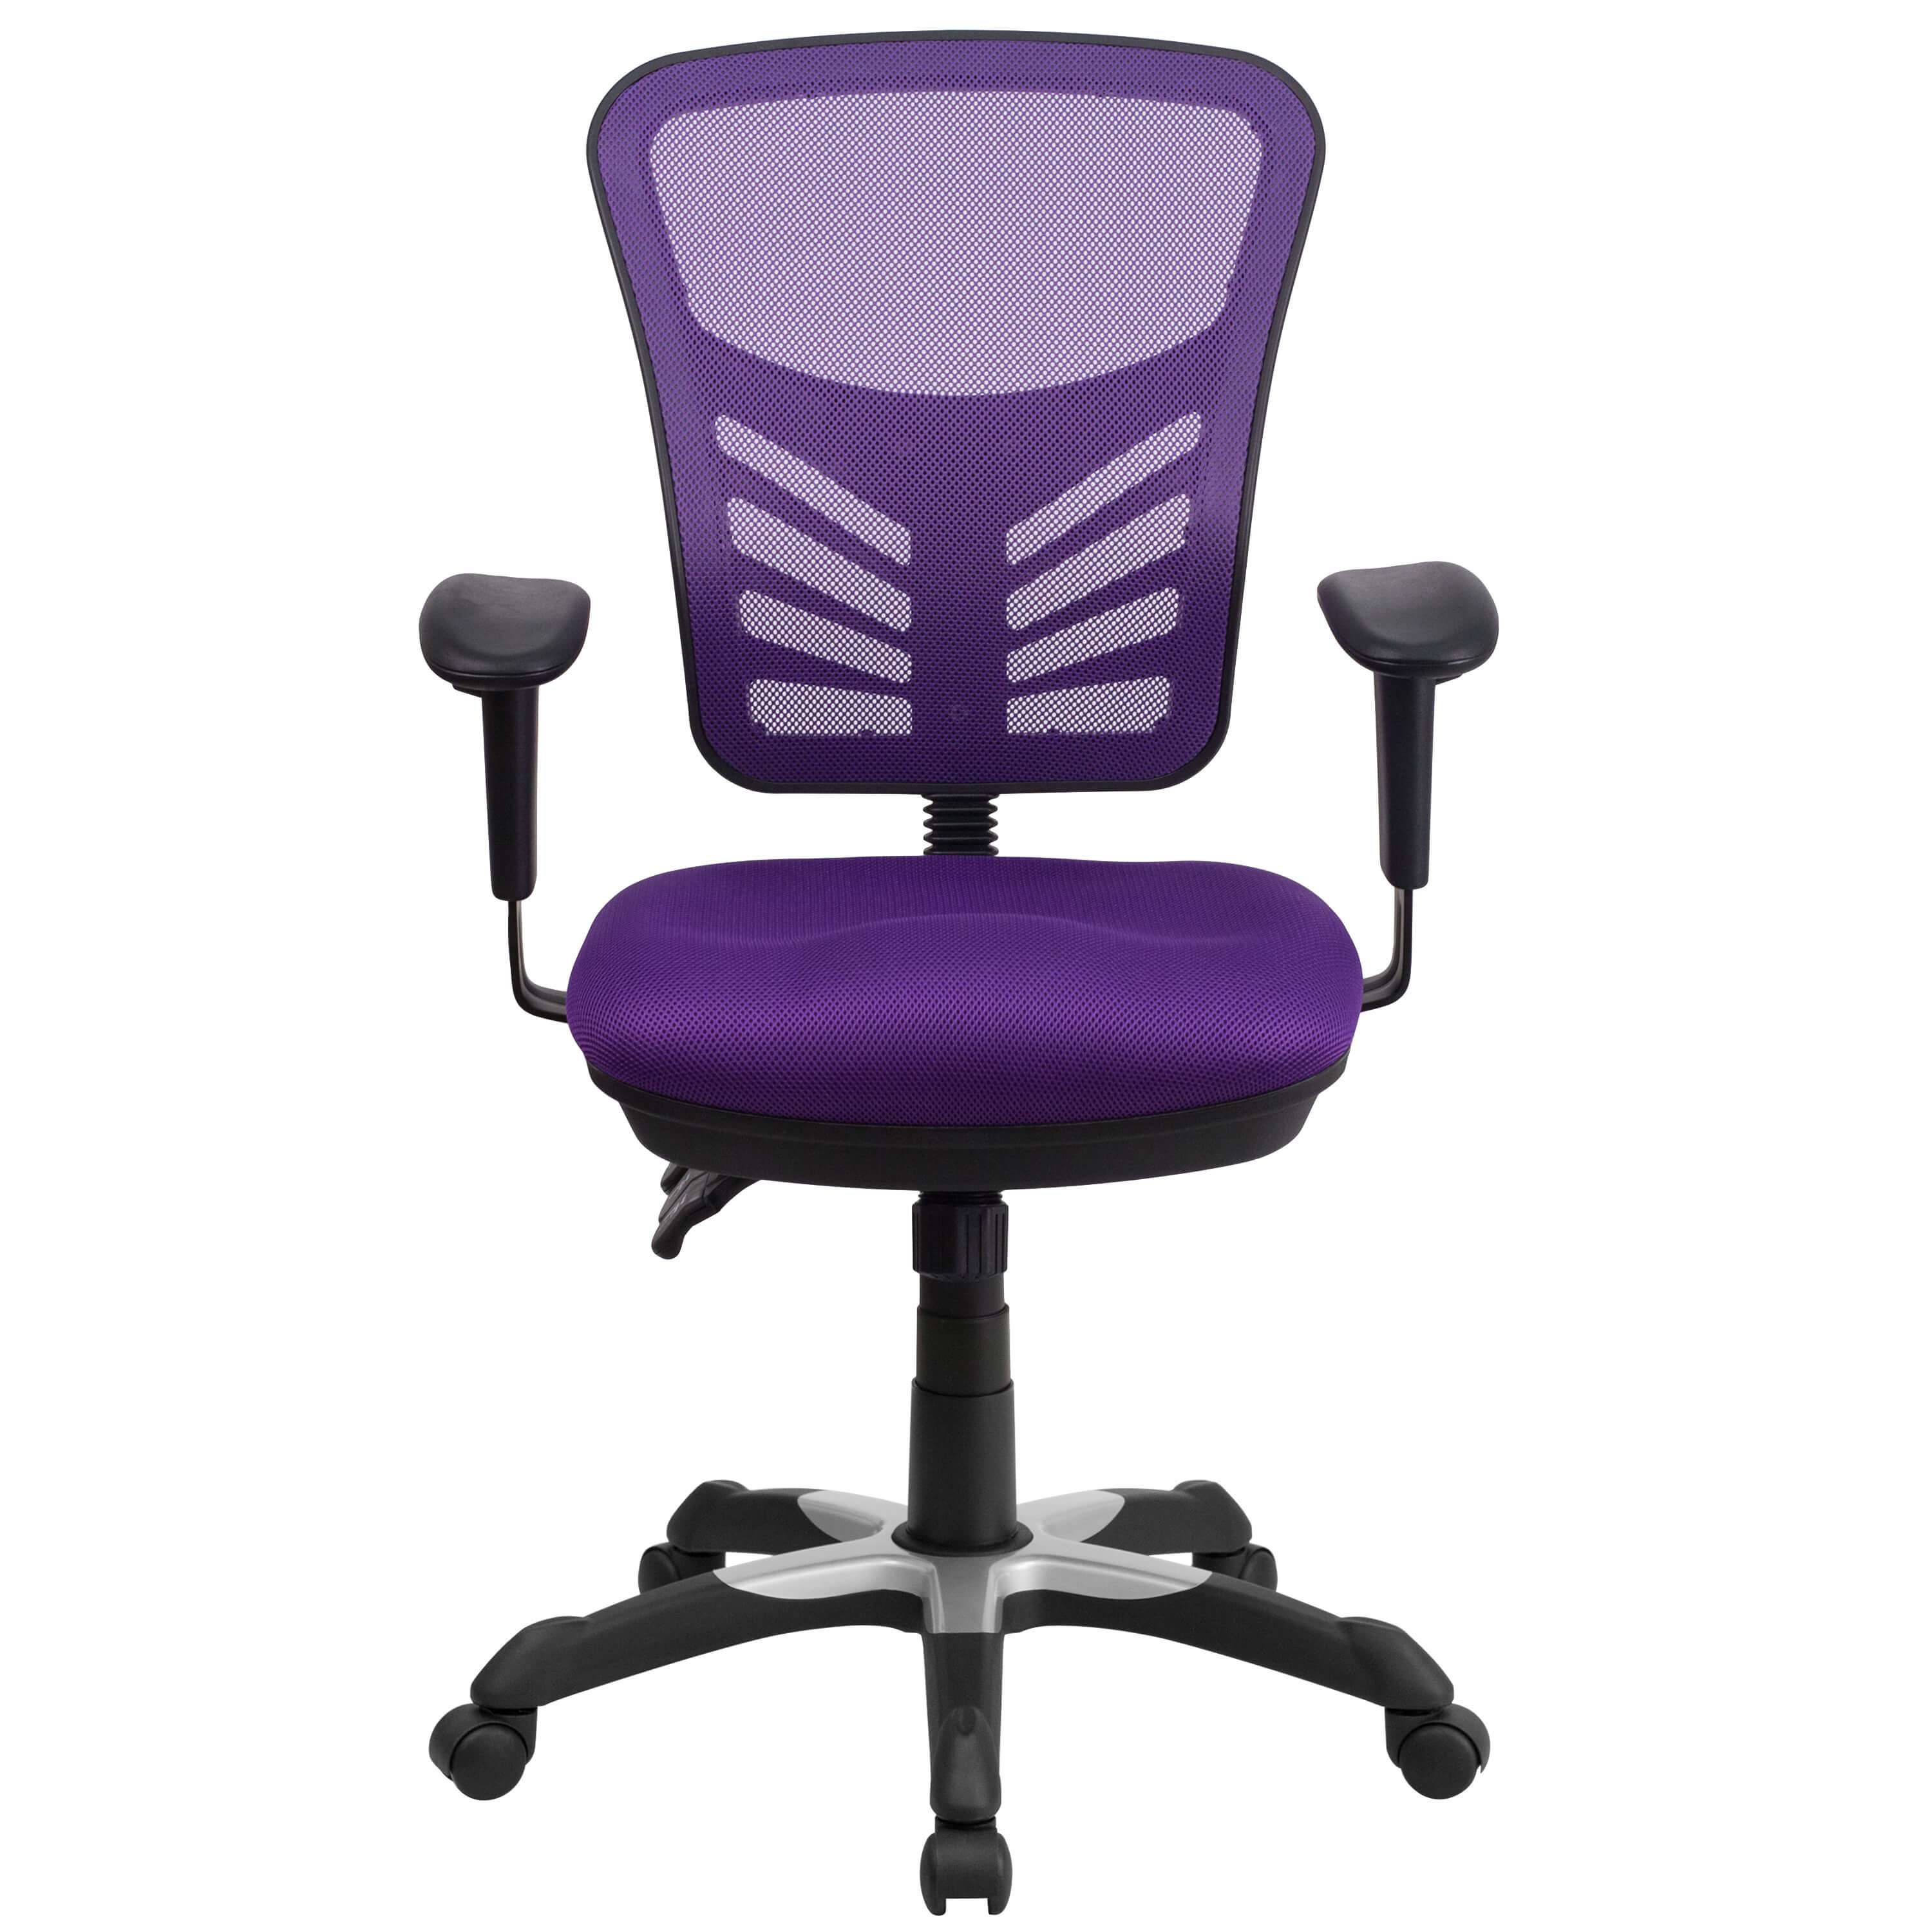 Colorful desk chairs CUB HL 0001 PUR GG FLA